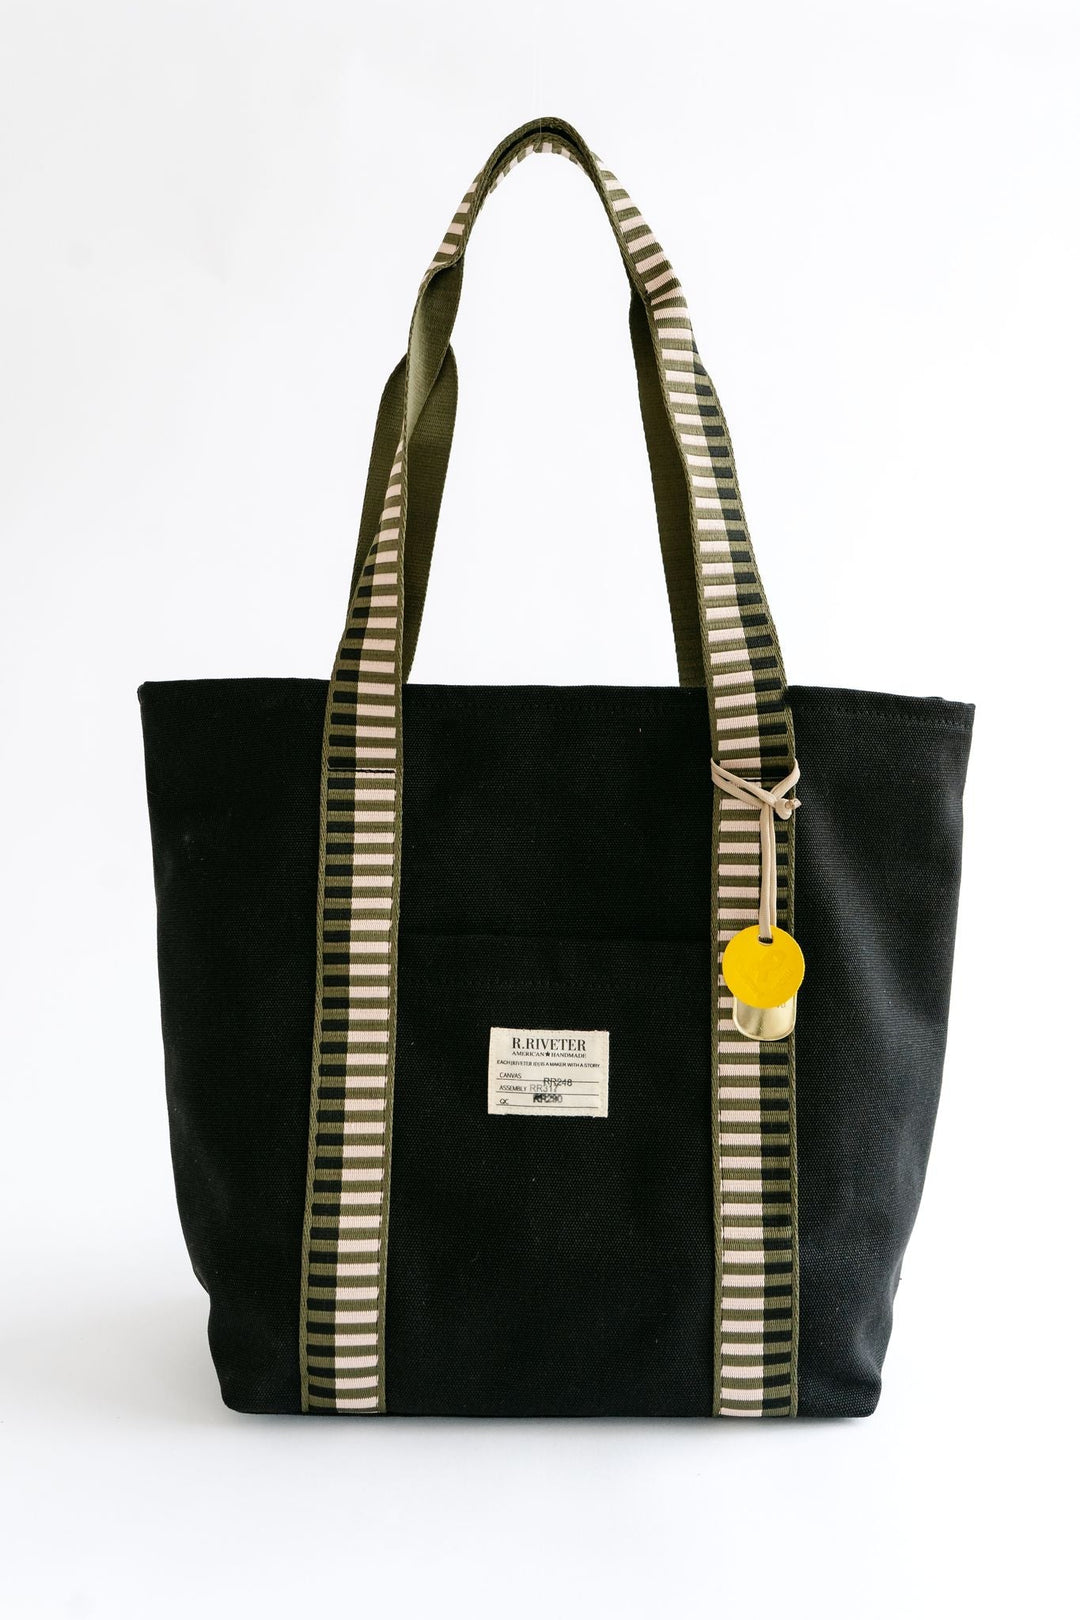 margot, Bags, Margot New York Gray Leather Backpack Shoulder Bag